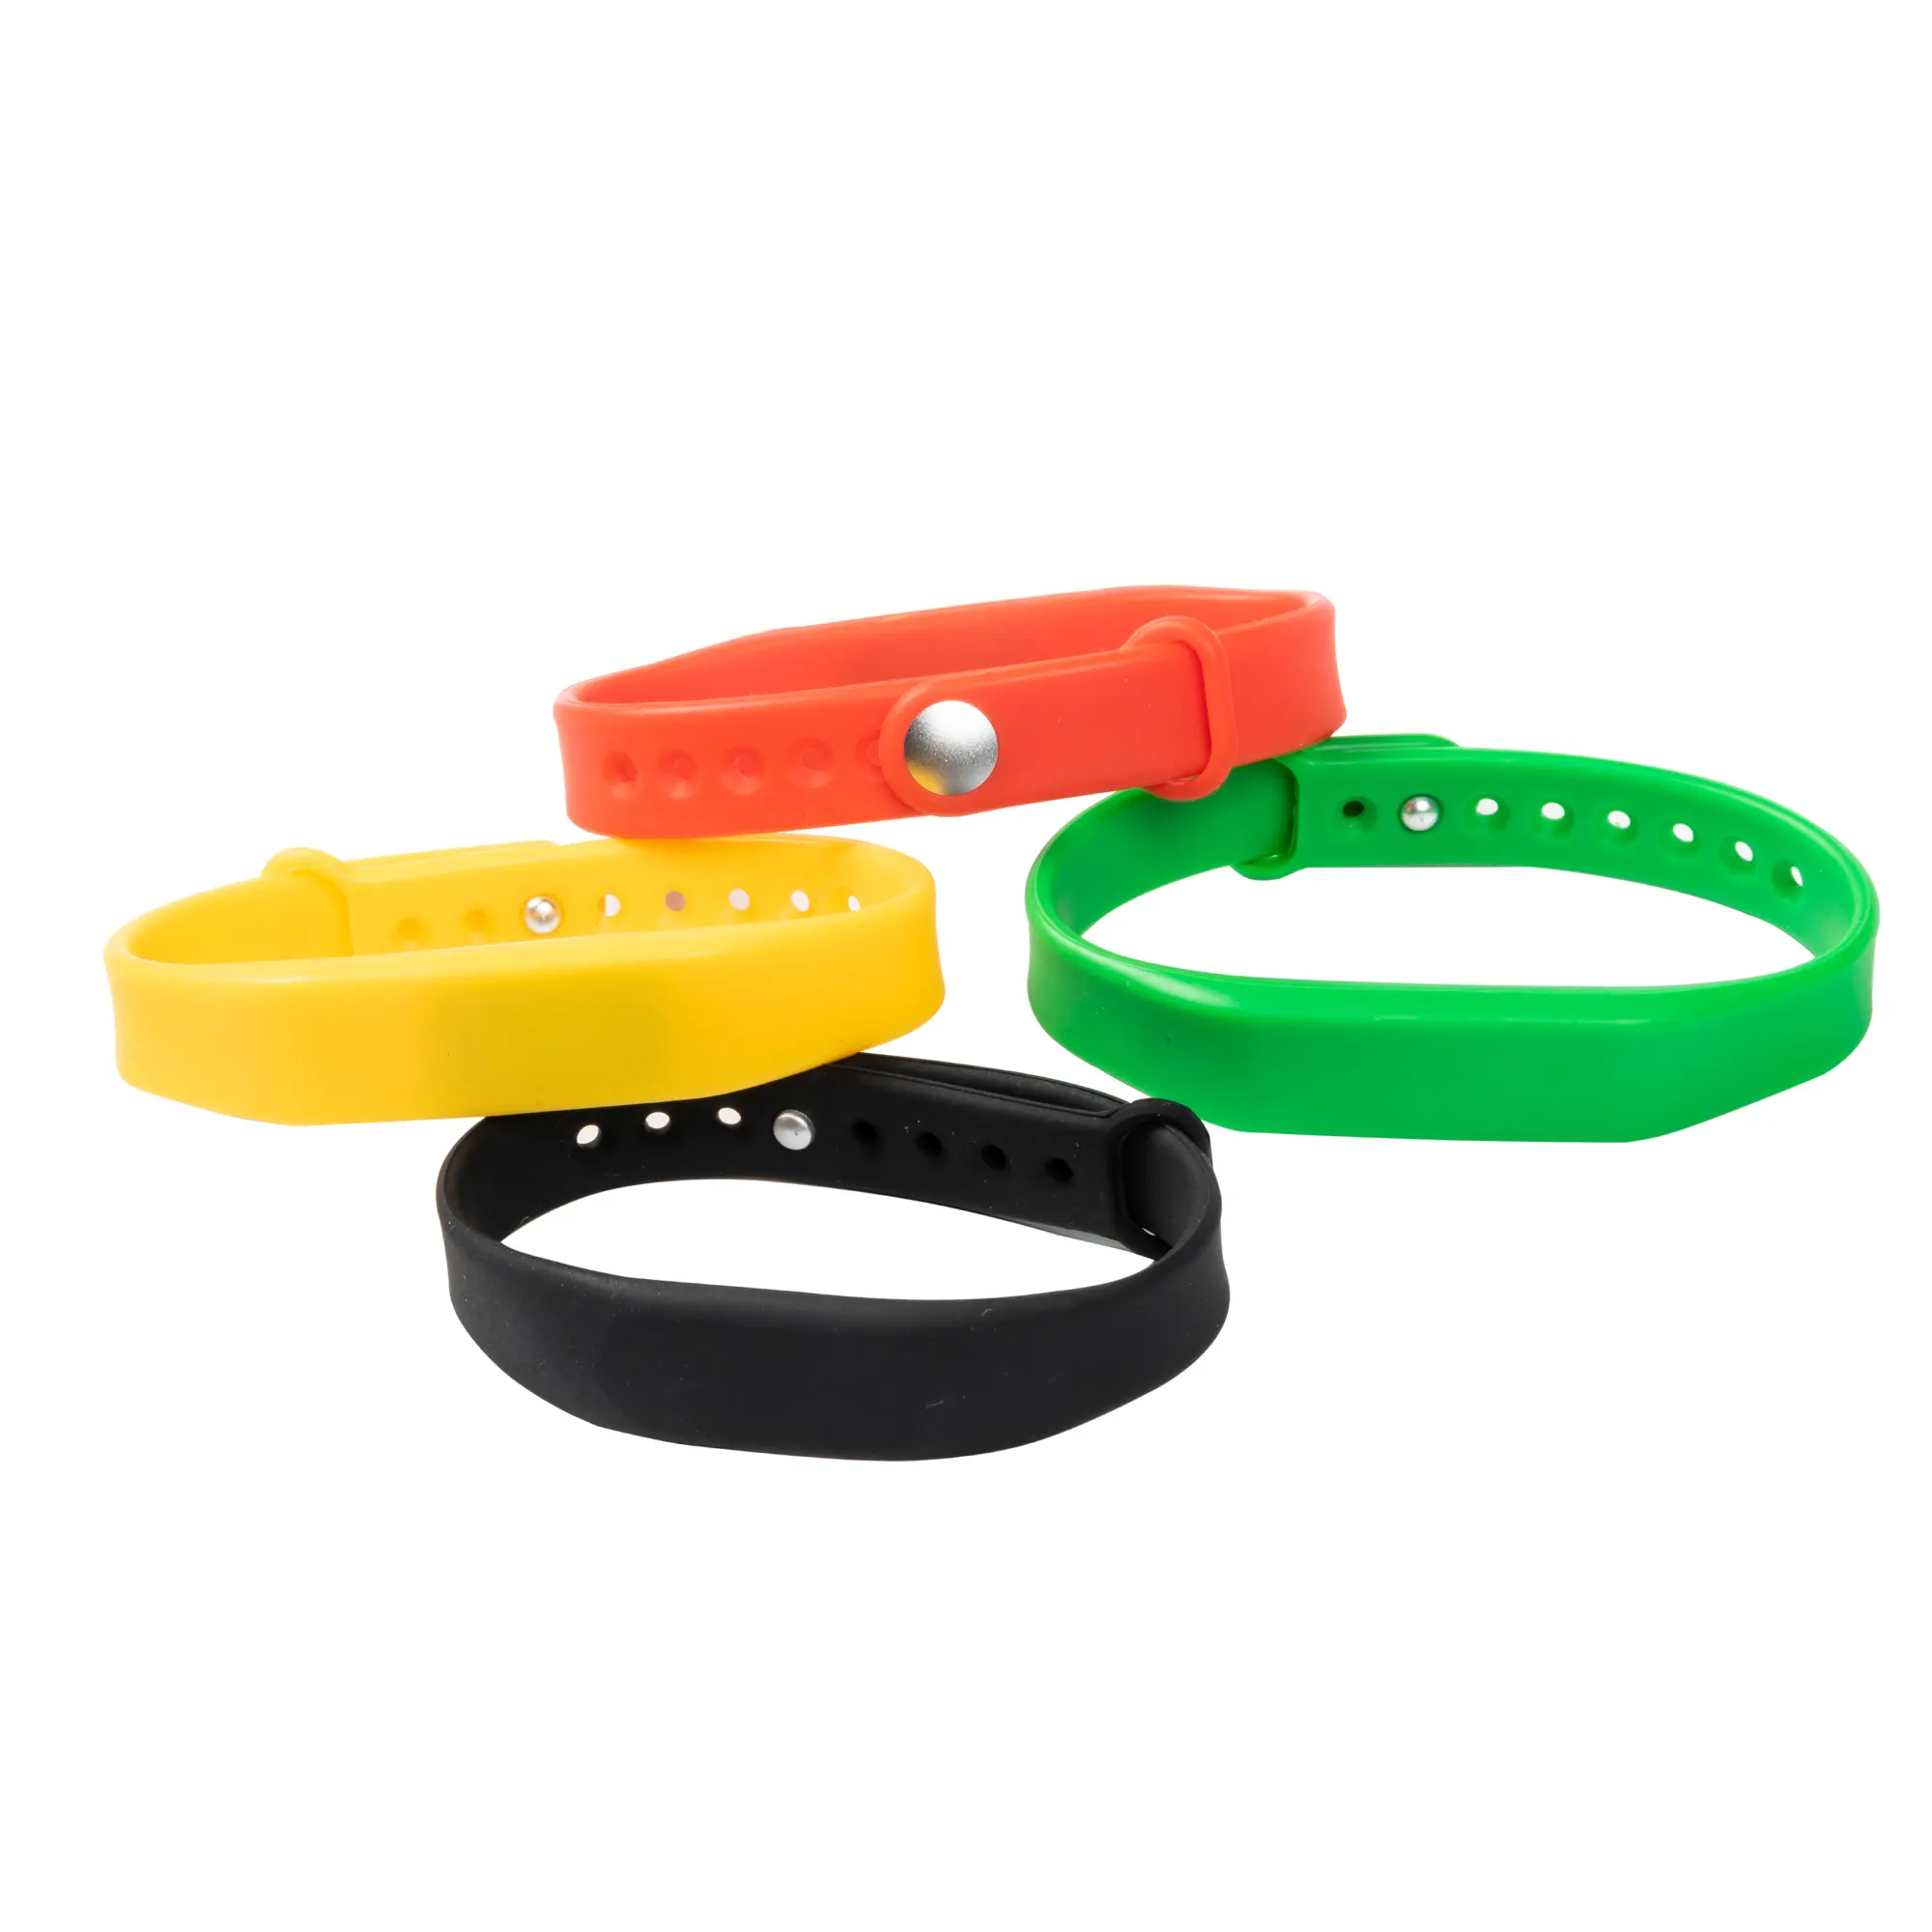 NFC Bracelet Wristband With Logo Custom 13.56Mhz Silicone Wristband For Event